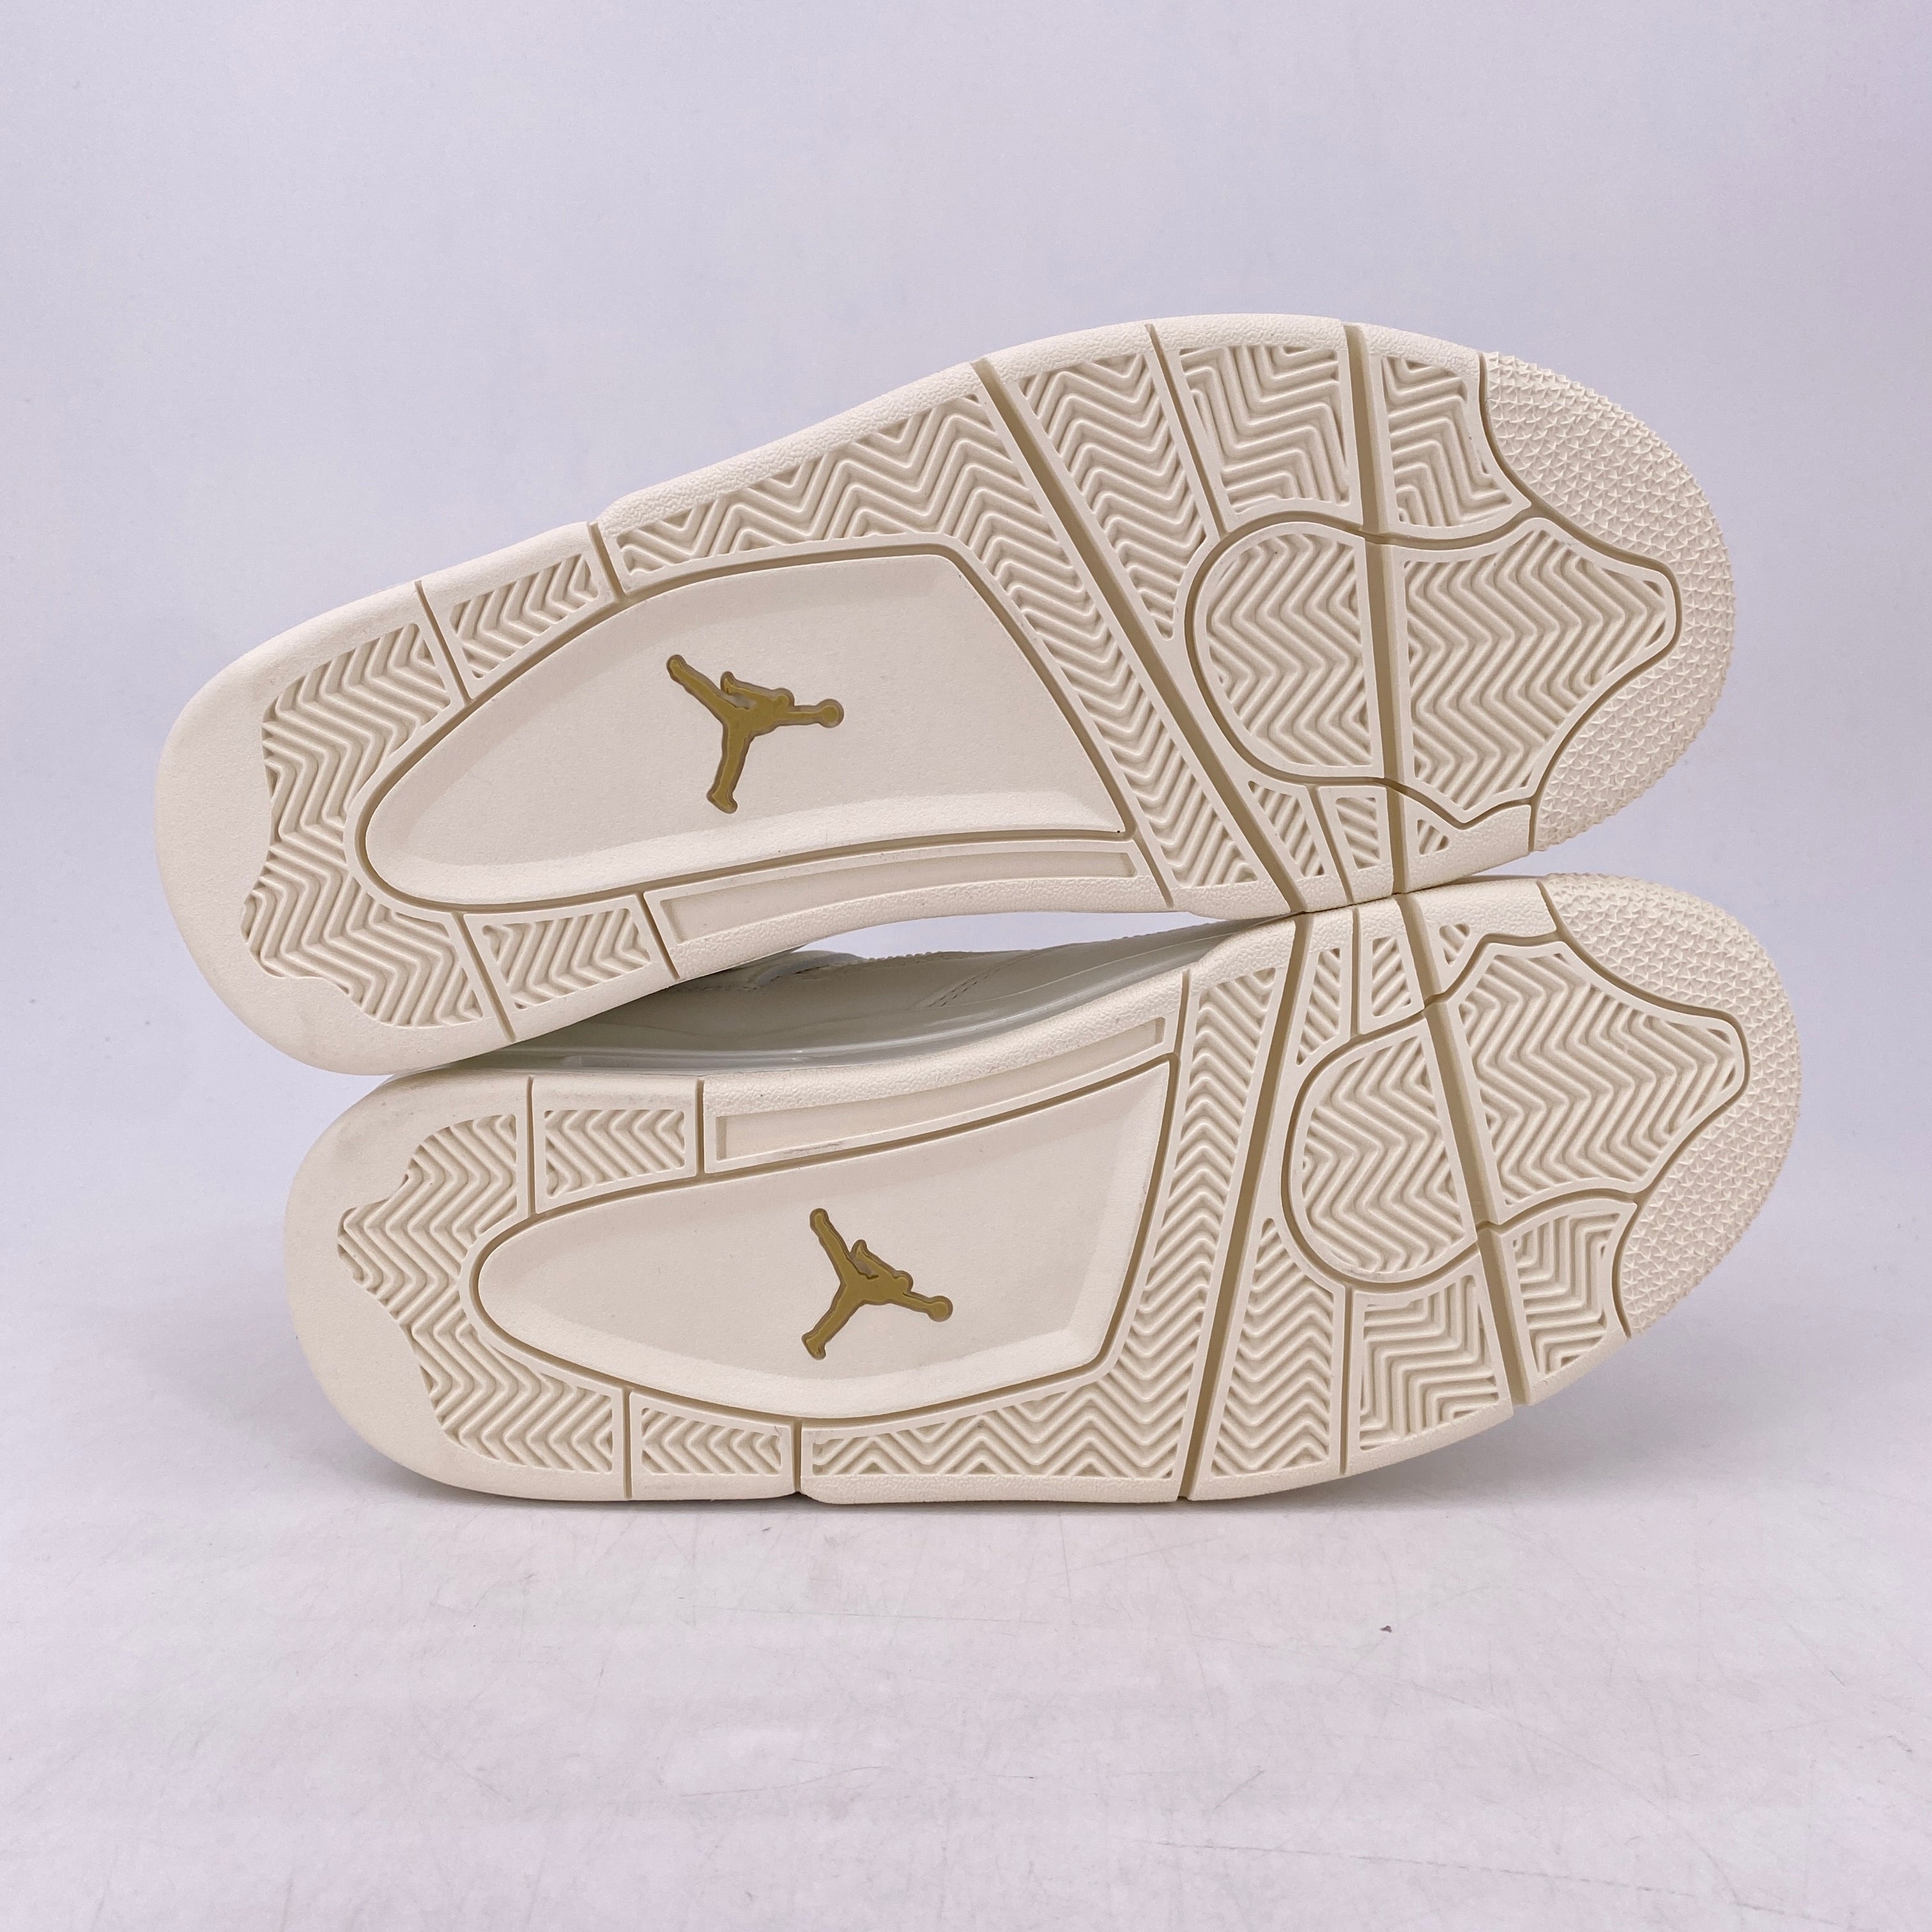 Air Jordan (W) 4 Retro &quot;Metallic Gold&quot; 2024 New Size 10.5W